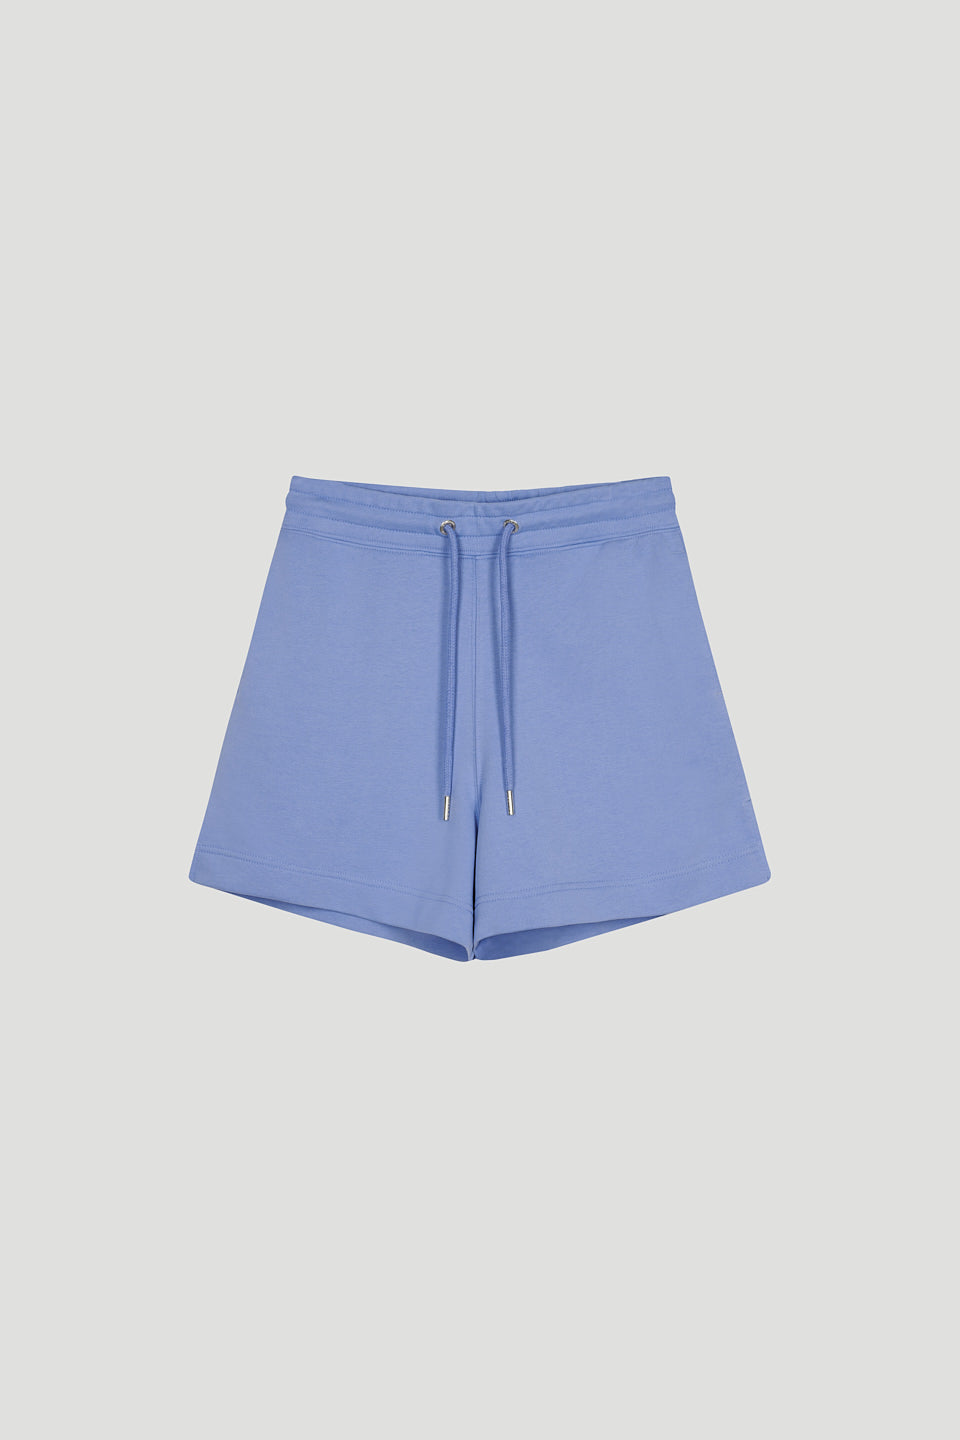 Lavi Shorts Soft Blue